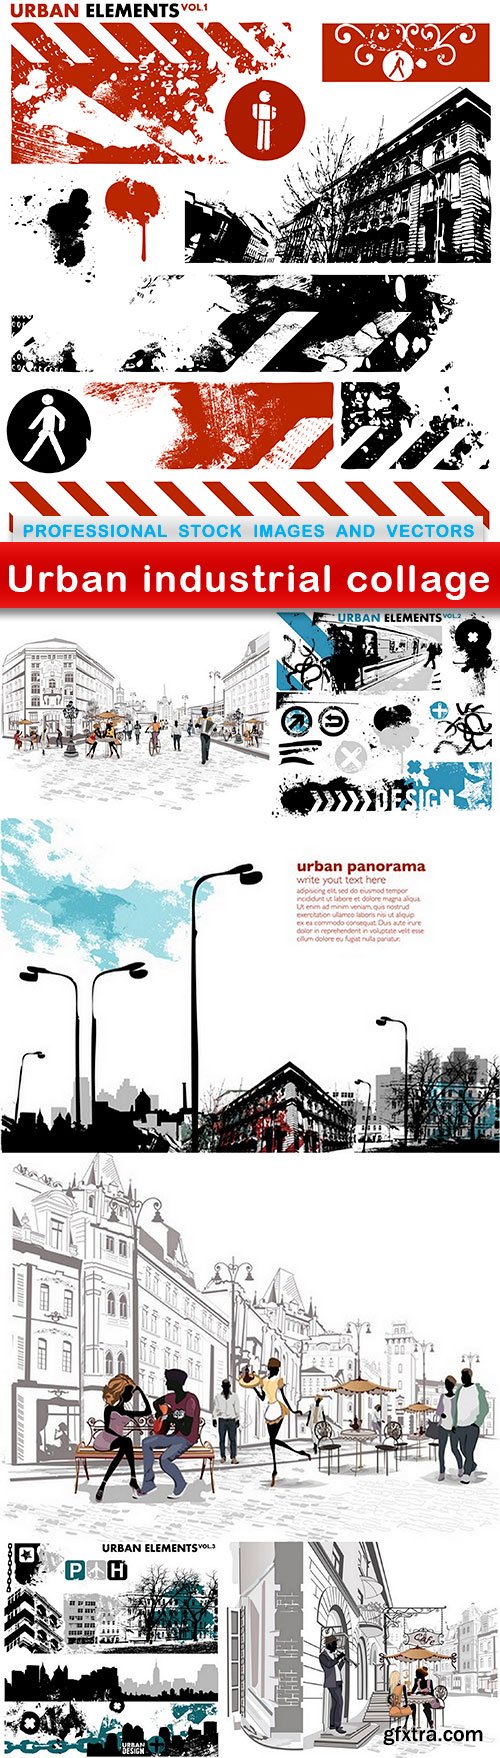 Urban industrial collage - 7 UHQ JPEG